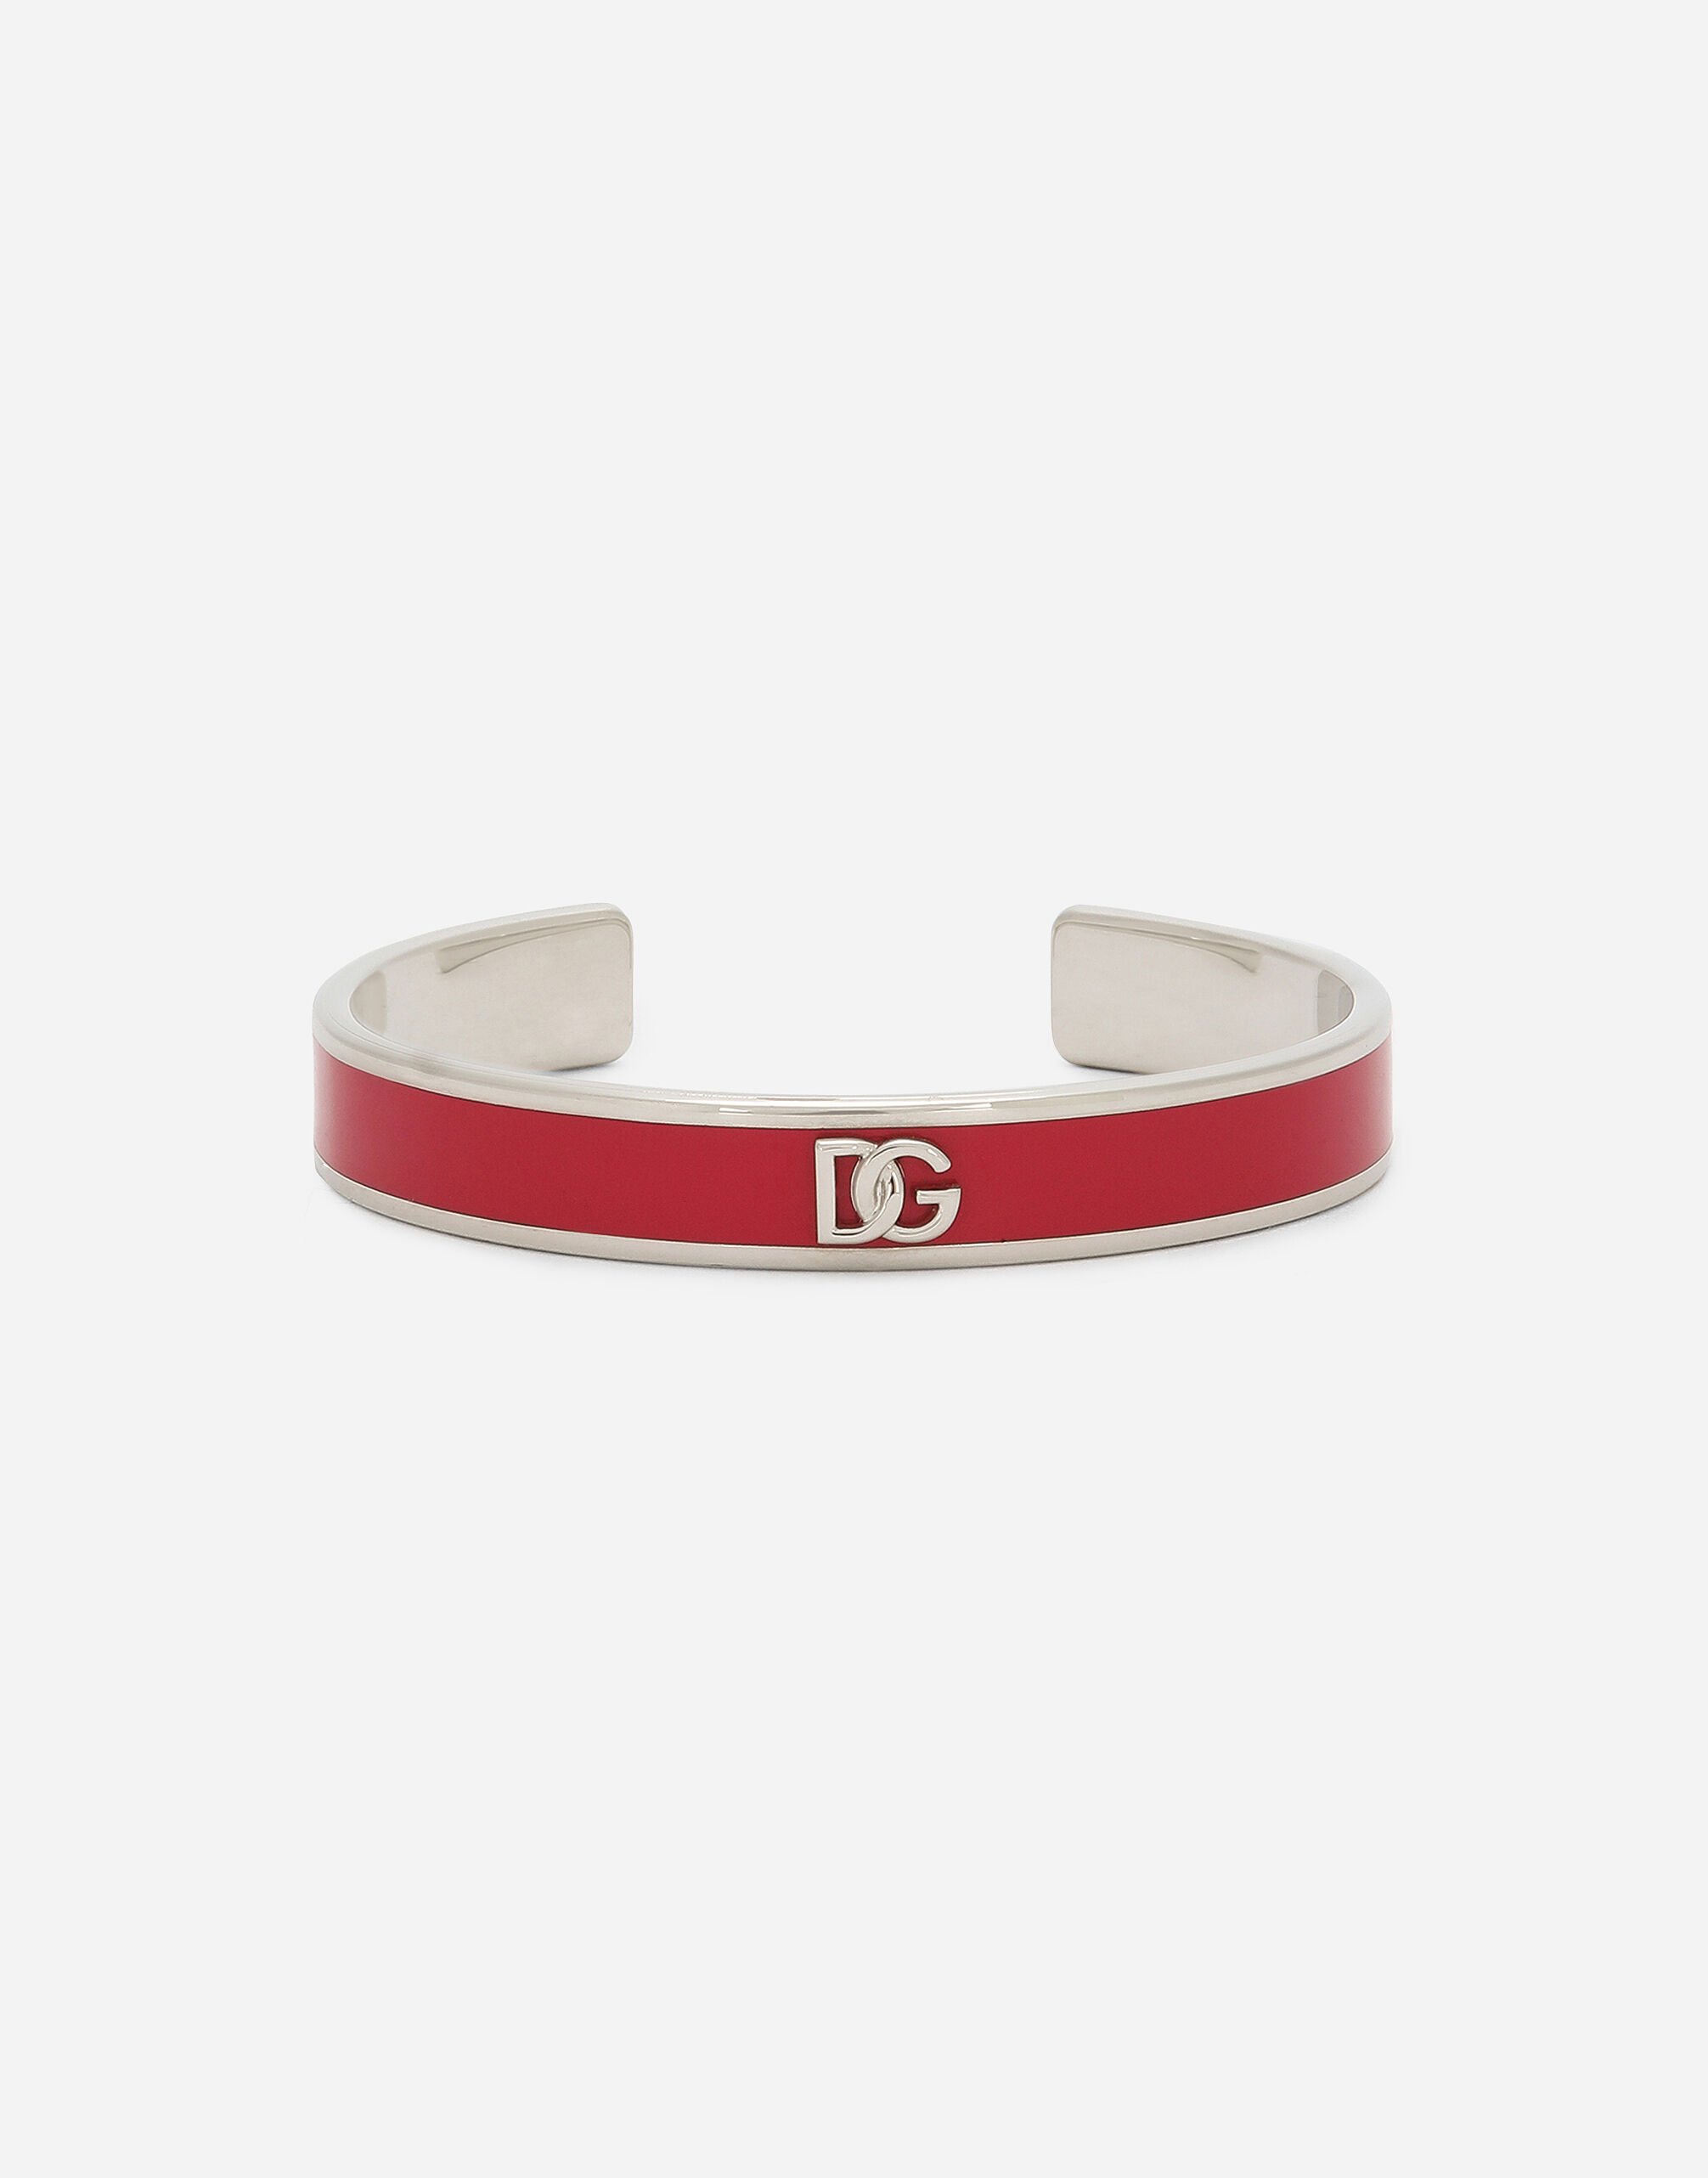 Dolce & Gabbana Rigid enameled bracelet with DG logo Fuchsia BE1446A1037